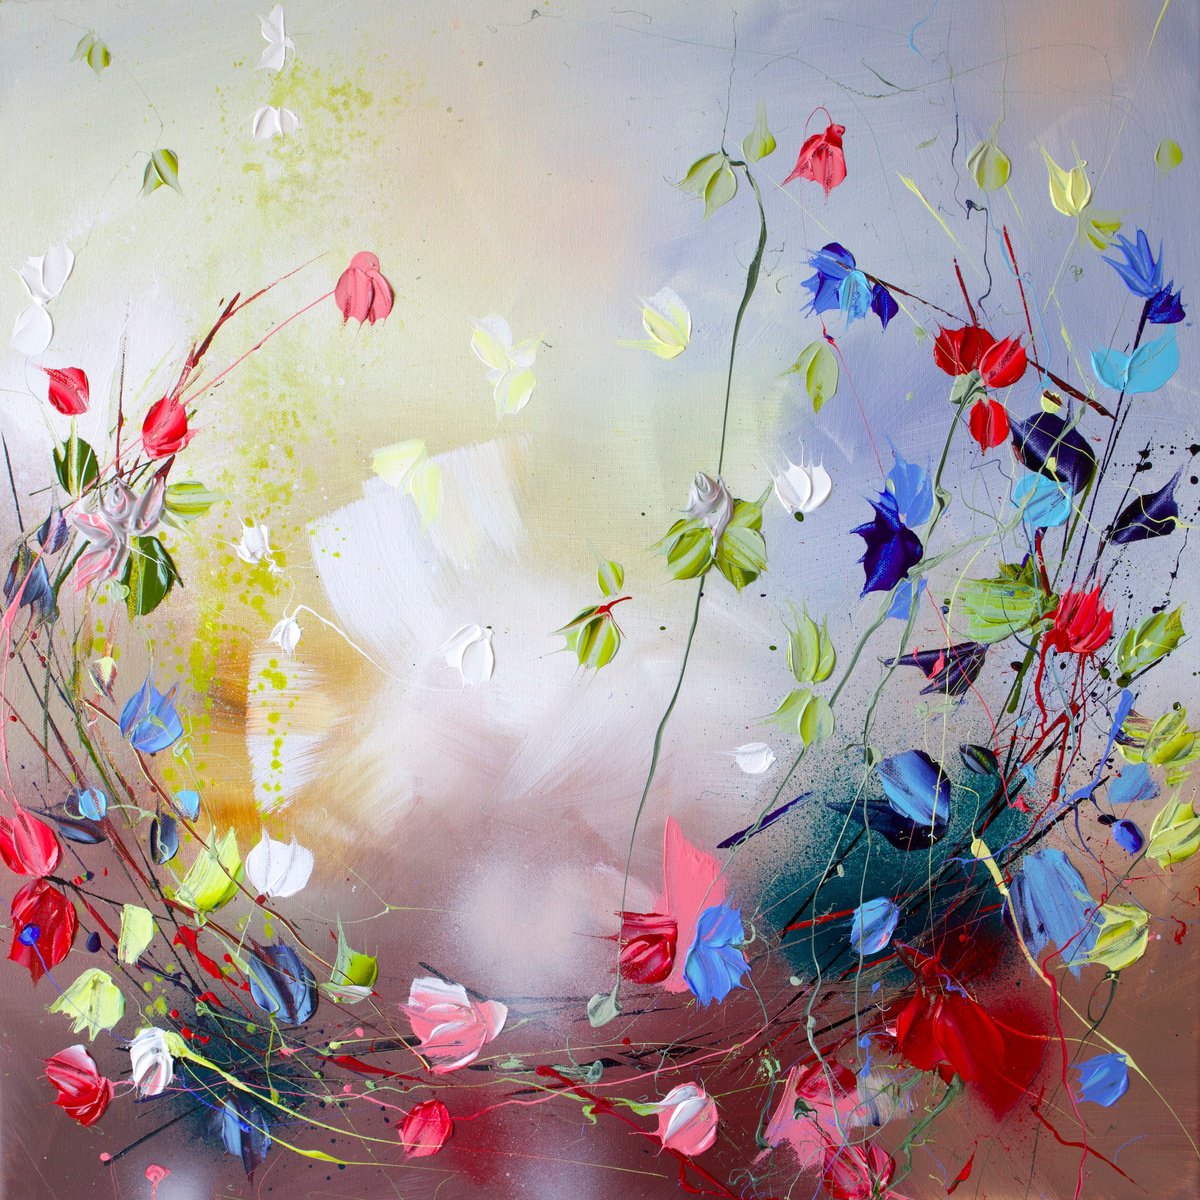 Flowers "Enchanted" 23,6 x 23,6 x 0,8 inches by Anastassia Skopp